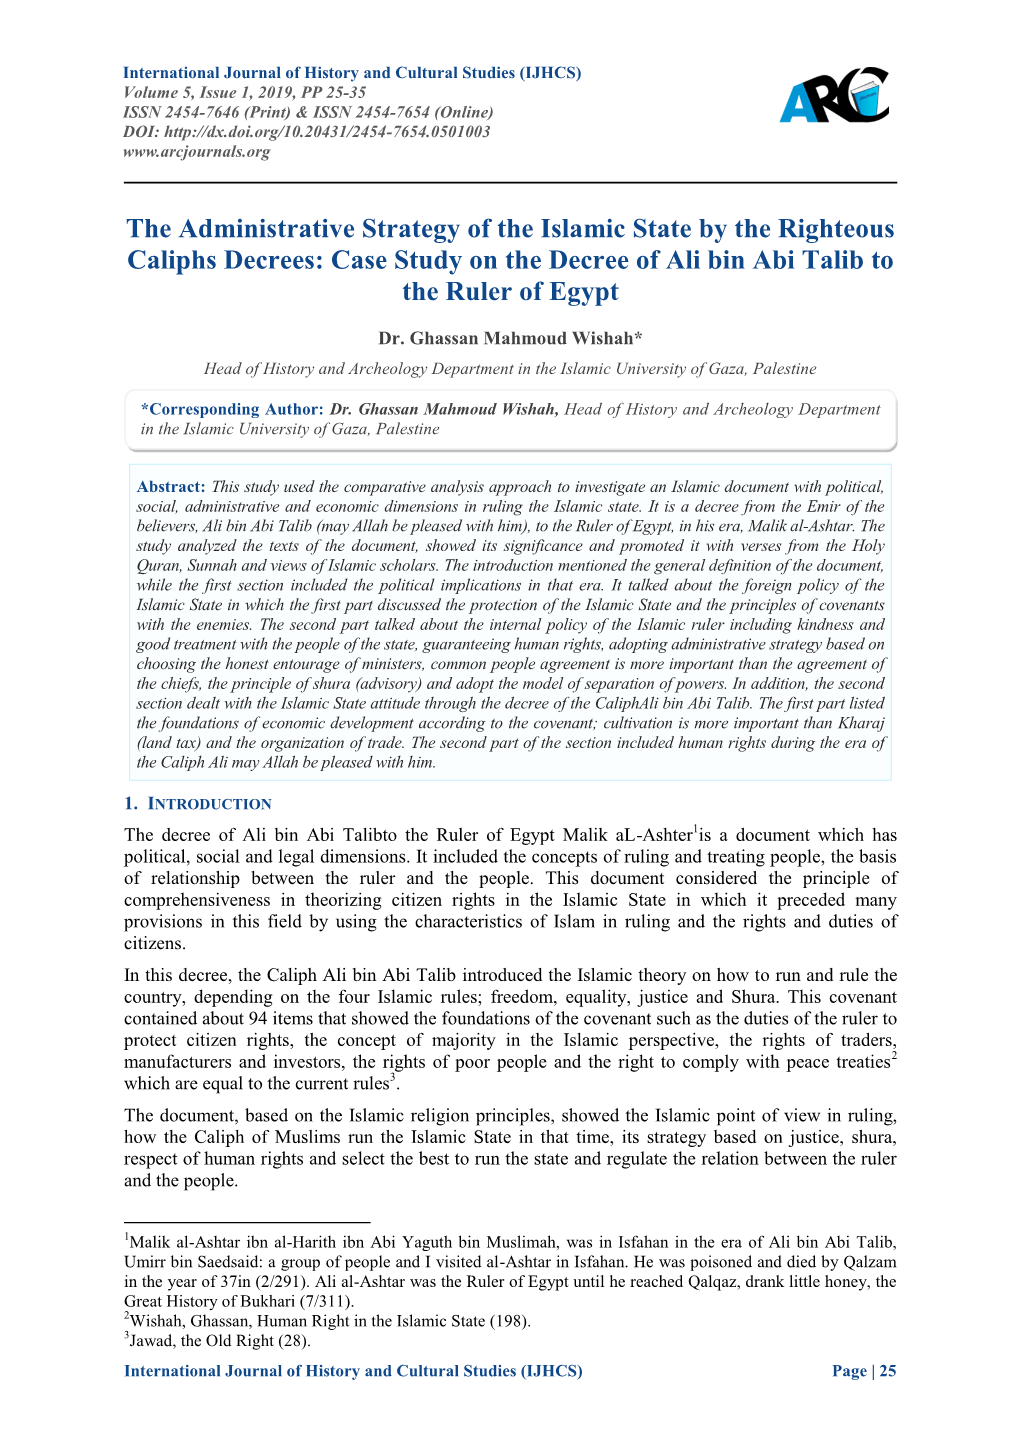 Case Study on the Decree of Ali Bin Abi Talib to the Ruler of Egypt